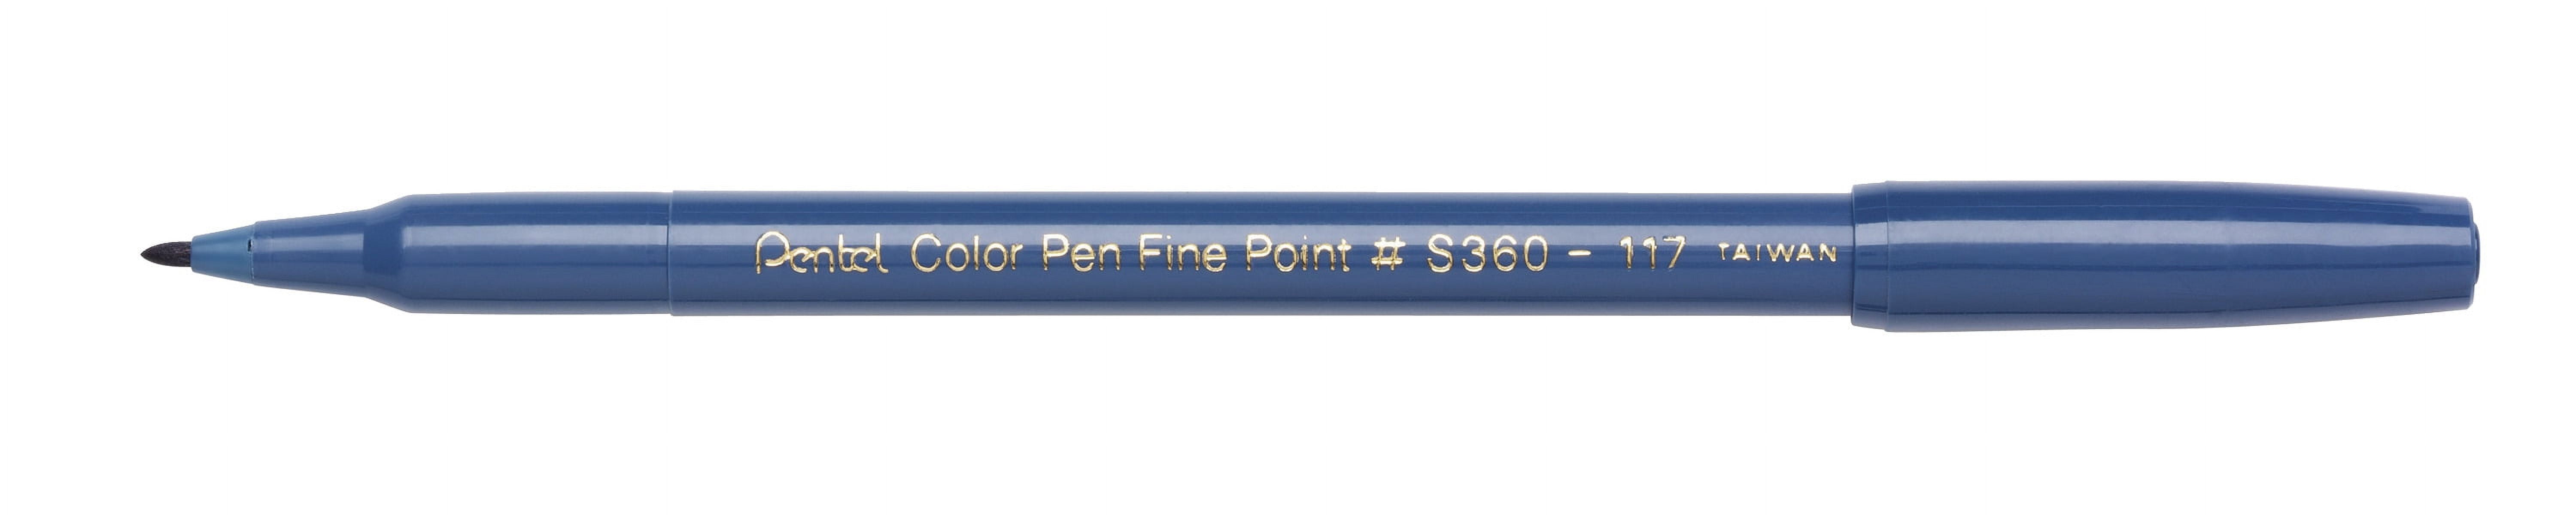 Pentel Arts — Tagged Brand: Color Pen — Pentel of America, Ltd.